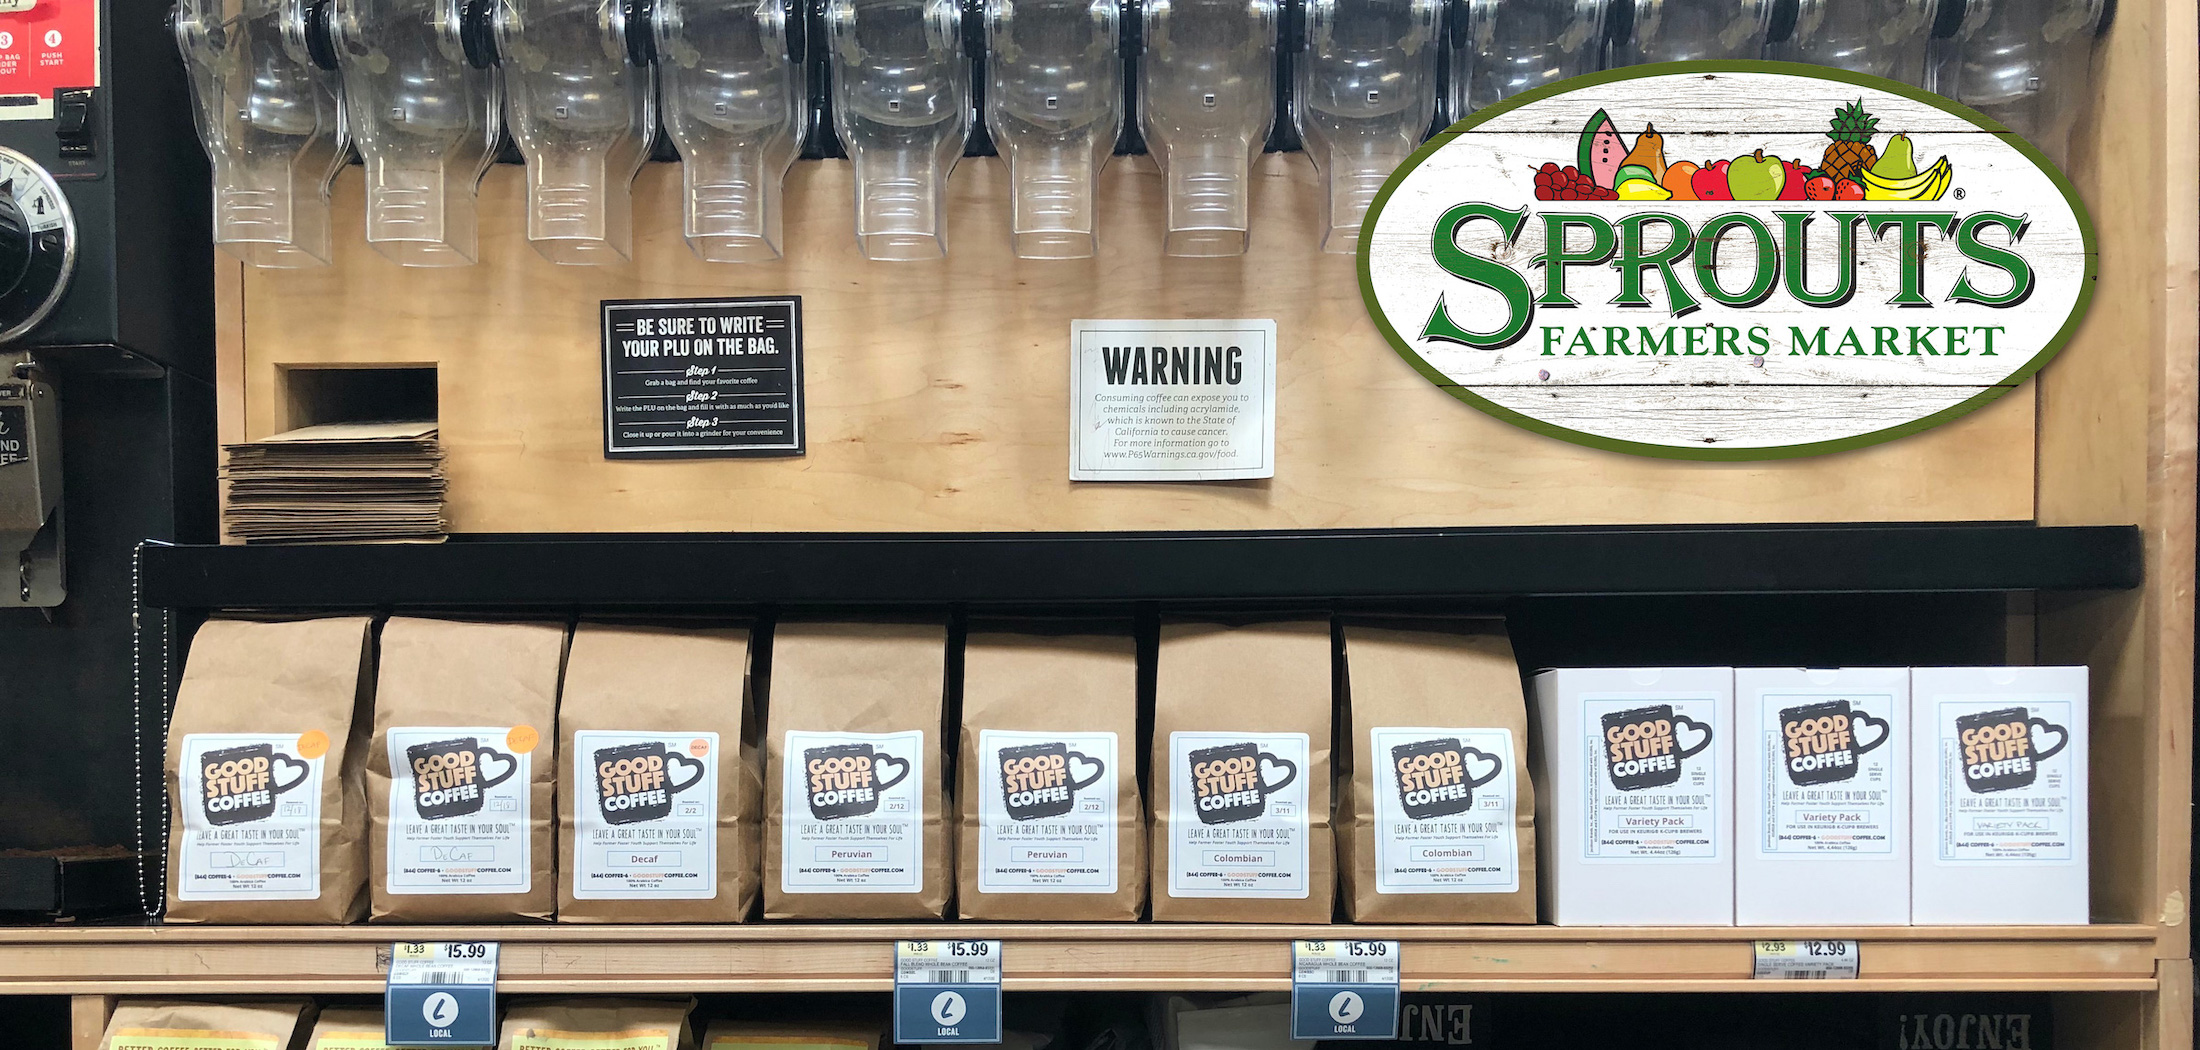 Good Stuff Coffee on Sprouts Shelf